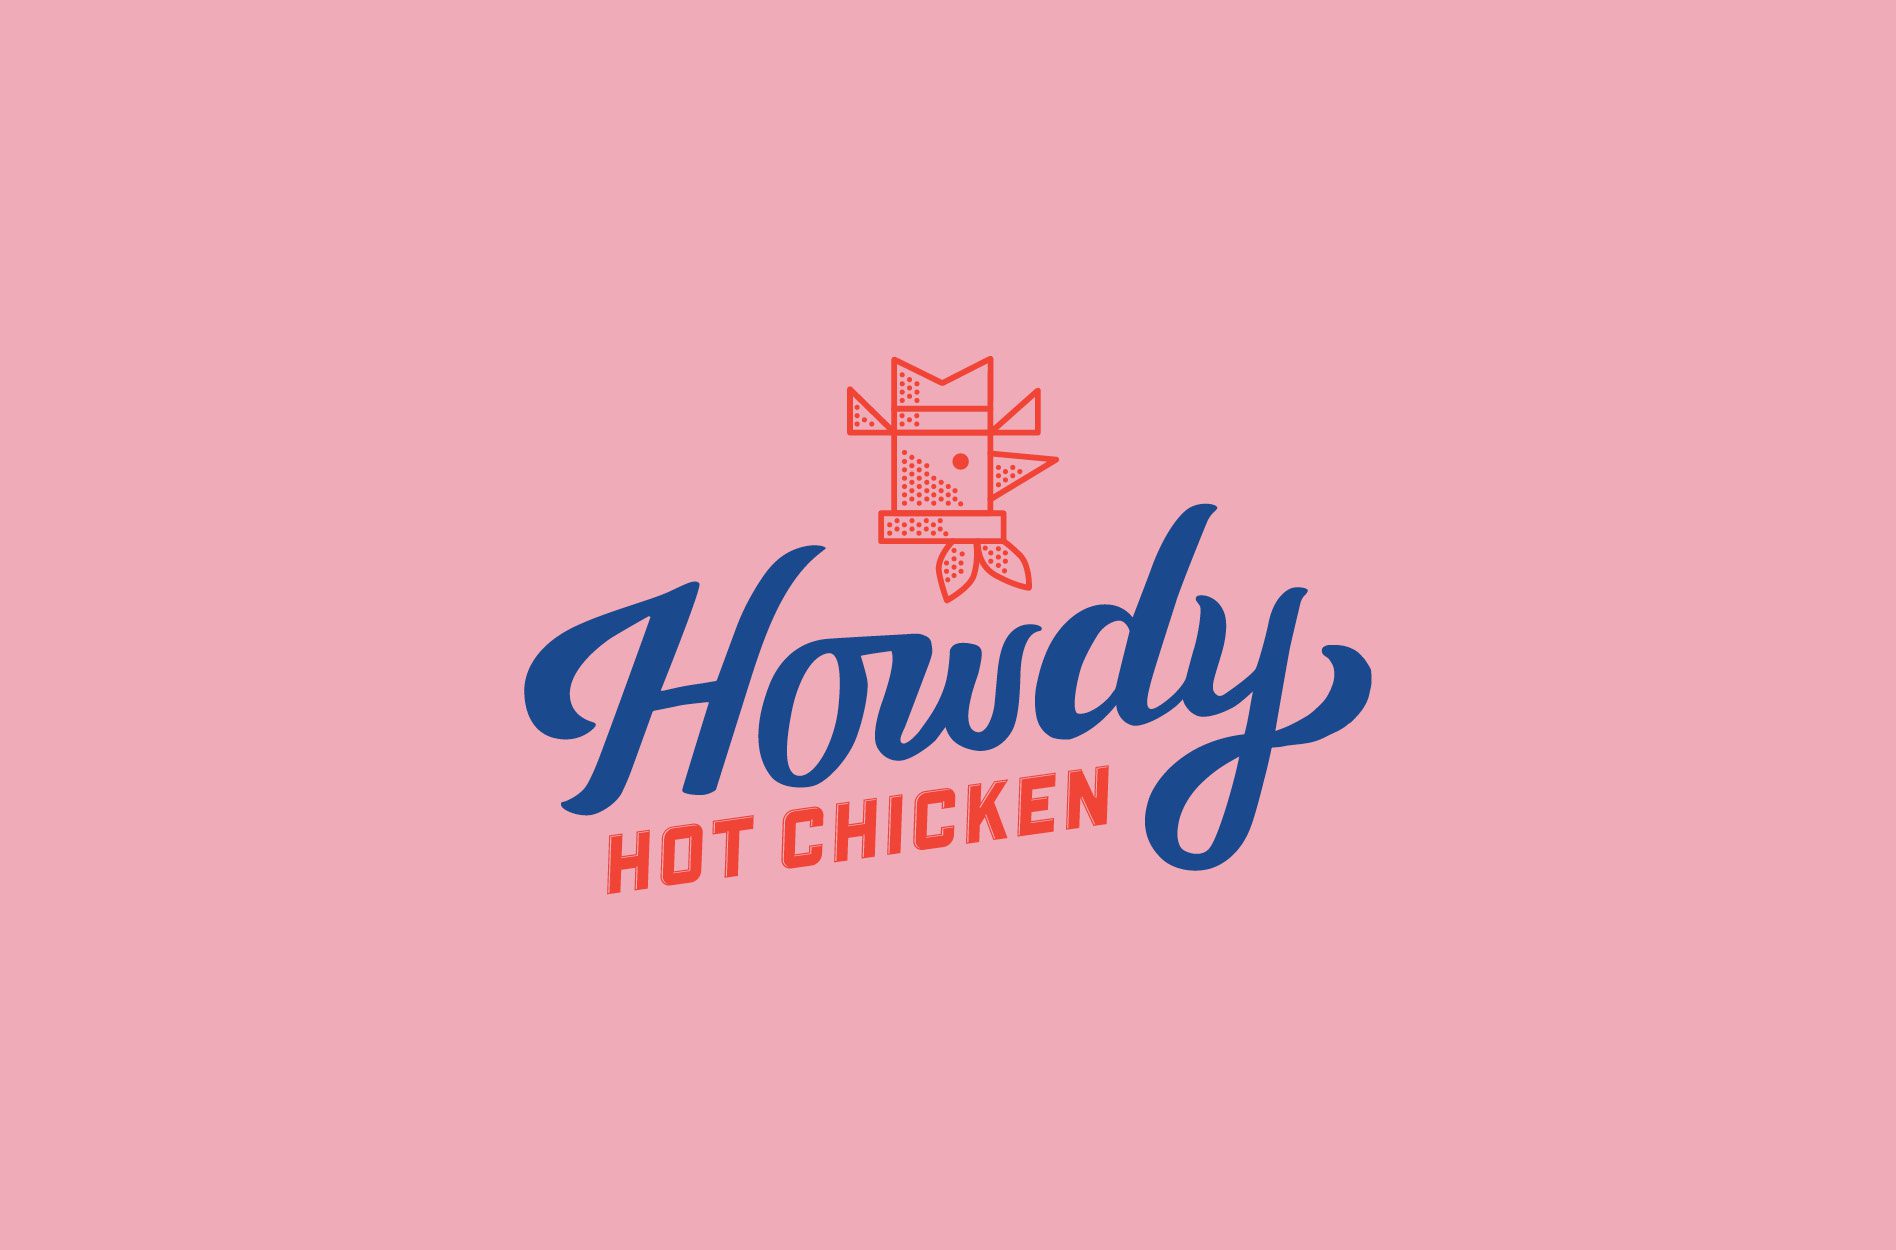 Hot Chicken Restaurant Logo and Branding